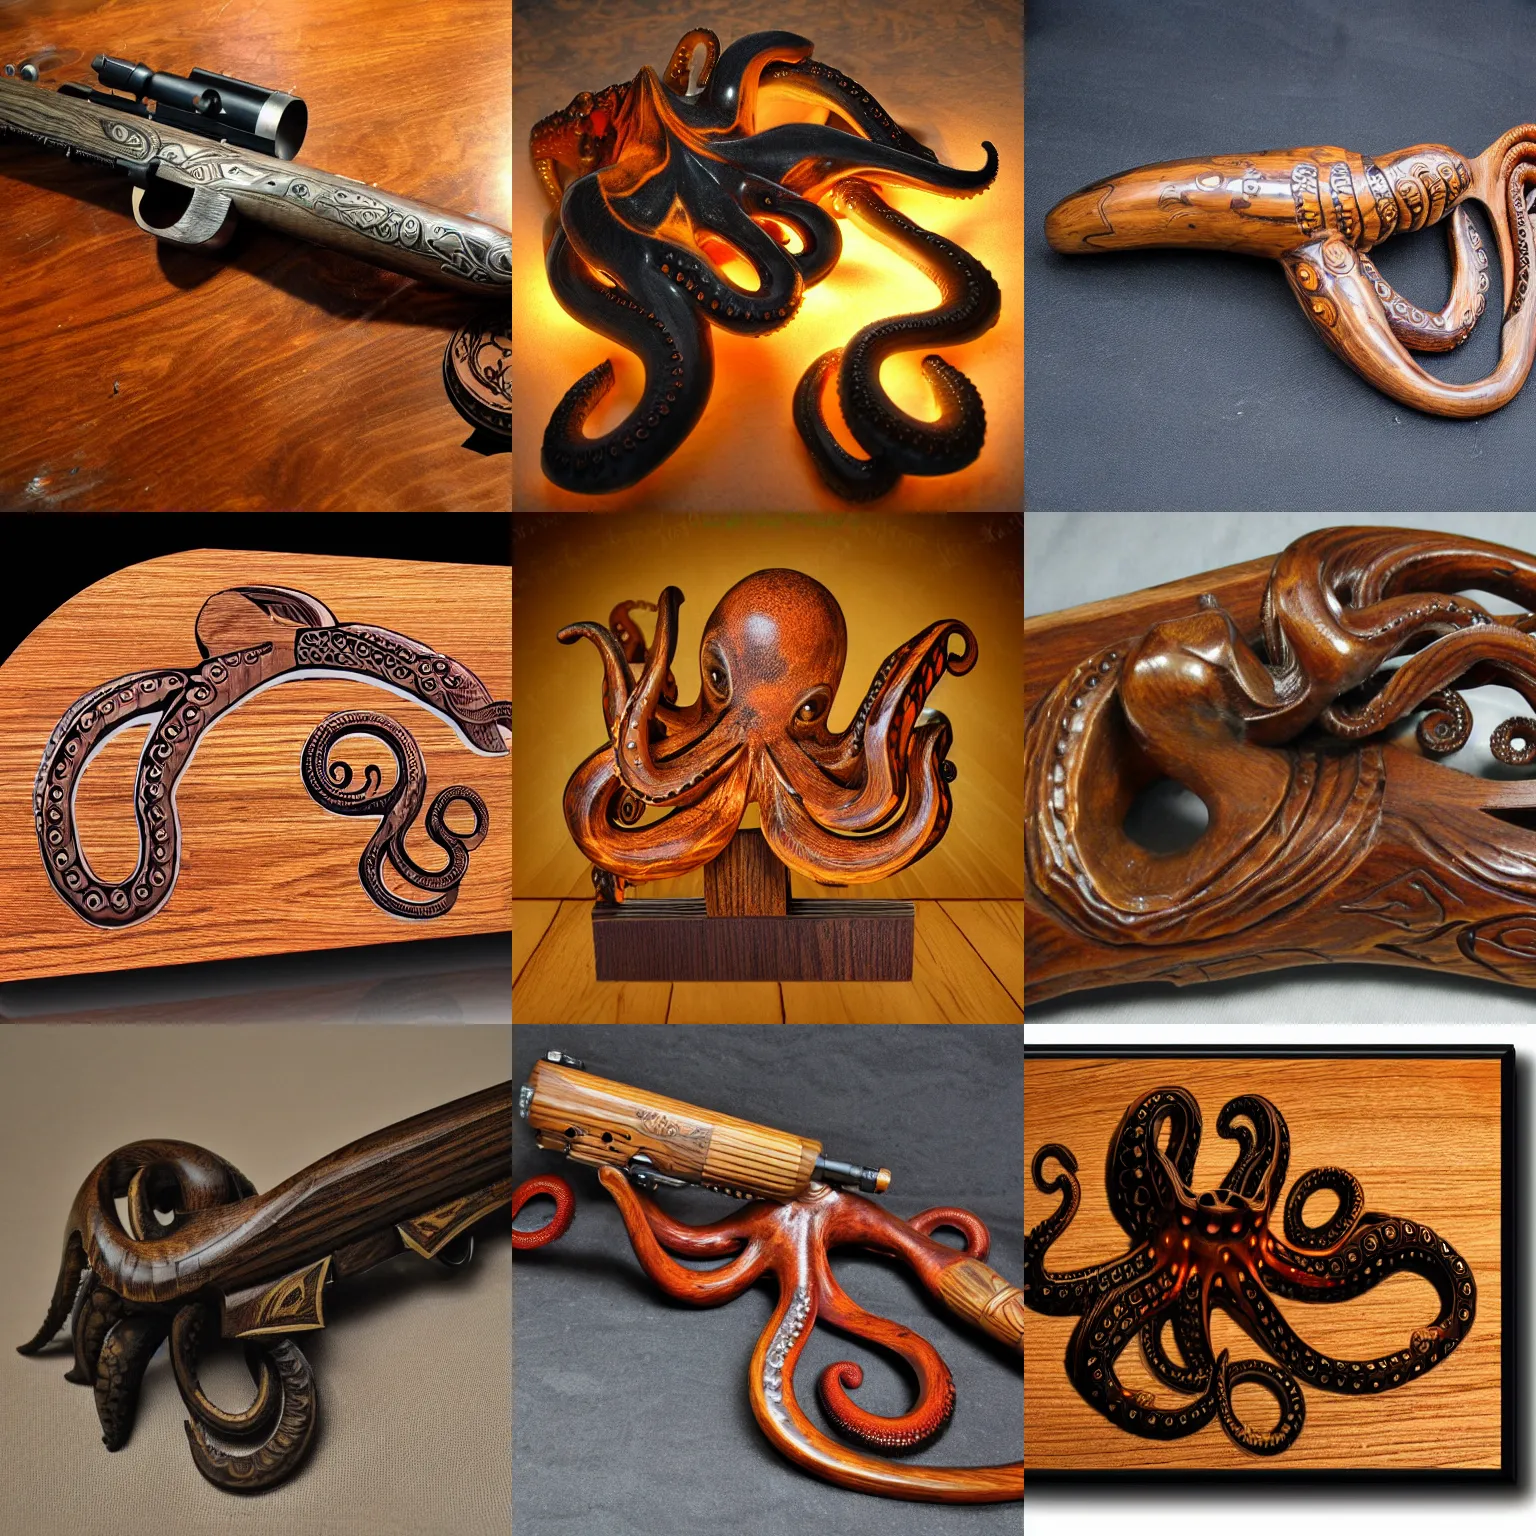 Prompt: photo side view of a 1 2 gauges gun design vintage hunting wood carved exotic octopus design dramatic lighting